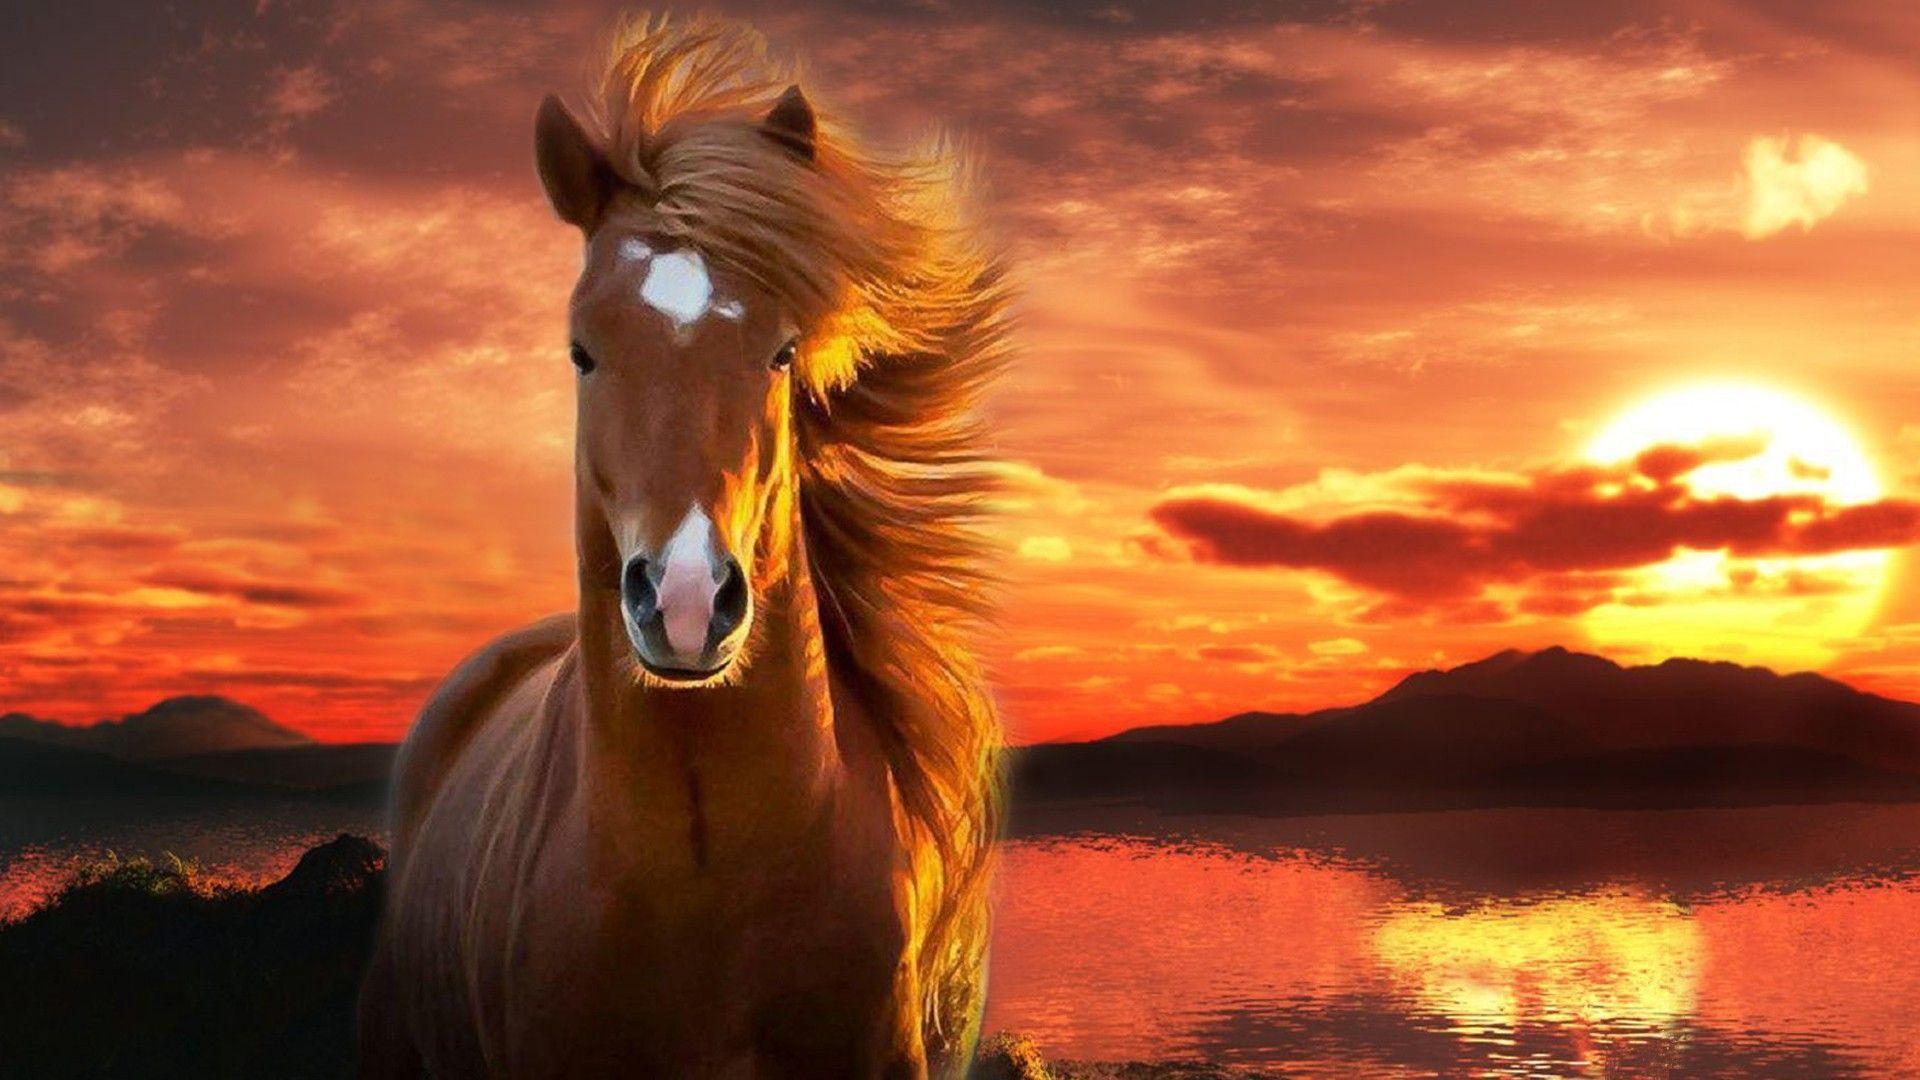 Horse Sunset Wallpaper Desktop Background. Horse wallpaper